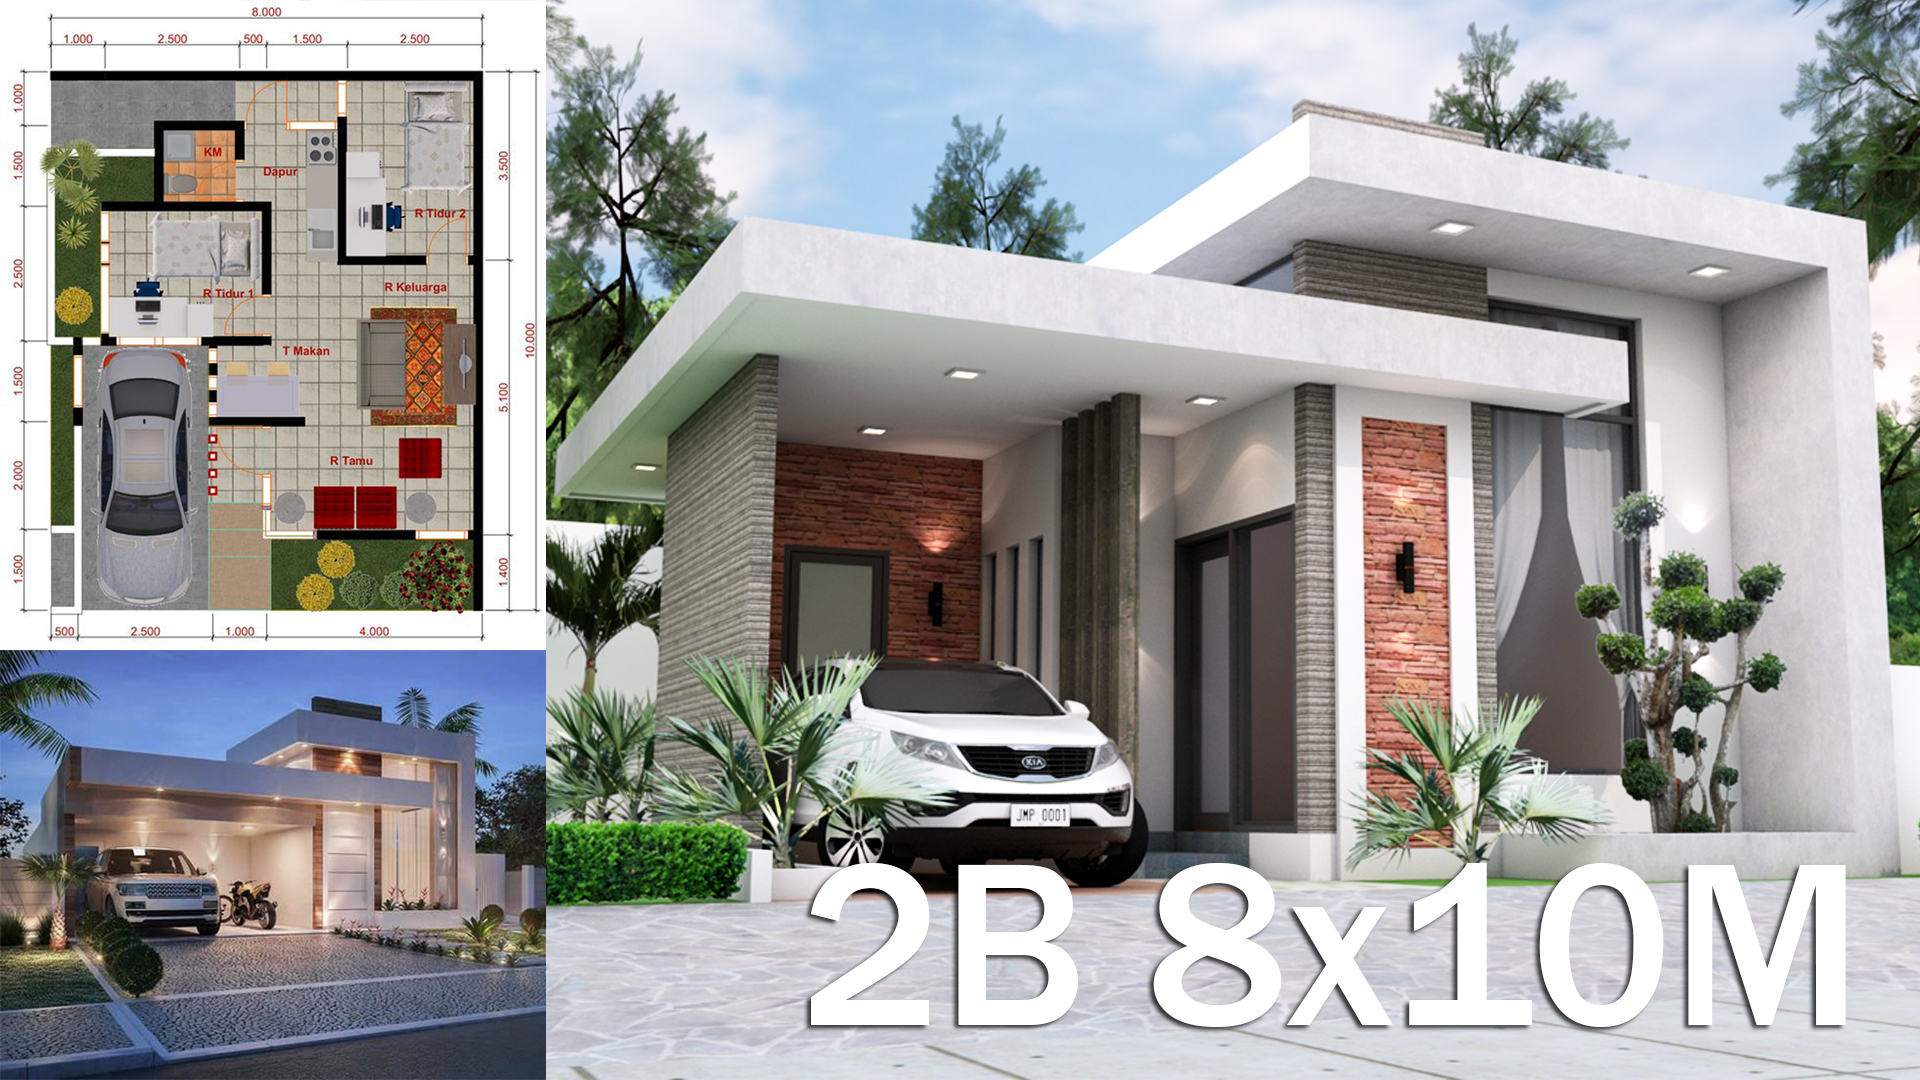 Sketchup House Modeling Idea From Photo 8x10M - SamPhoas Plan